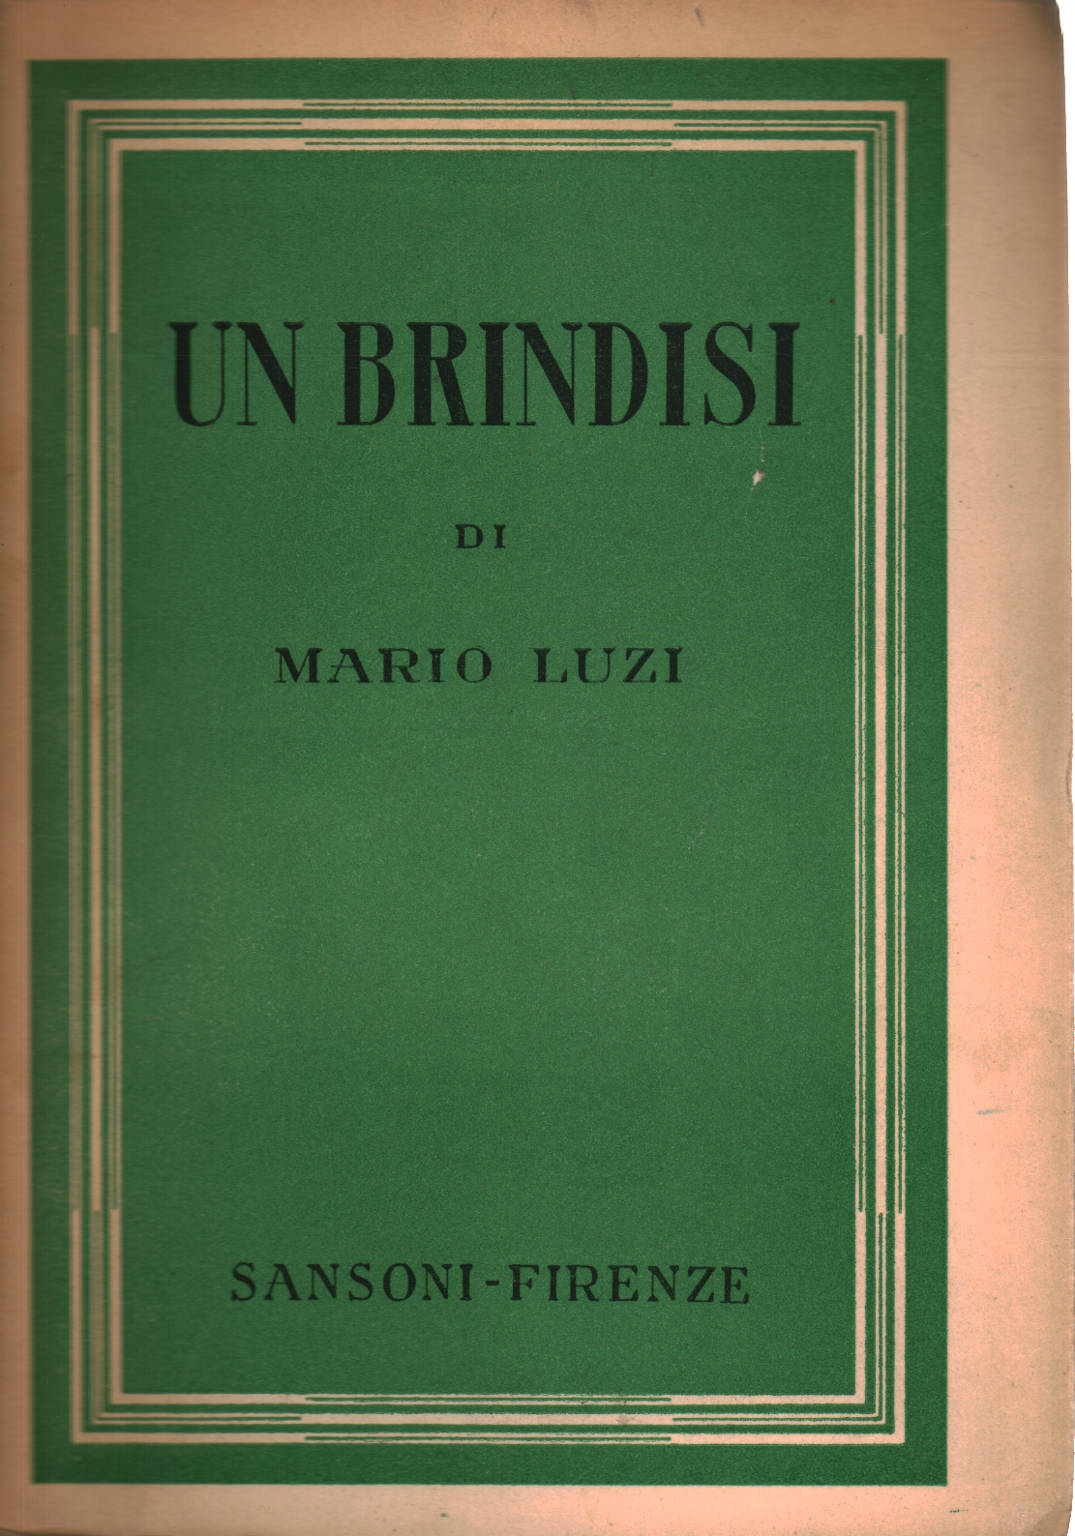 Un brindisi, Mario Luzi